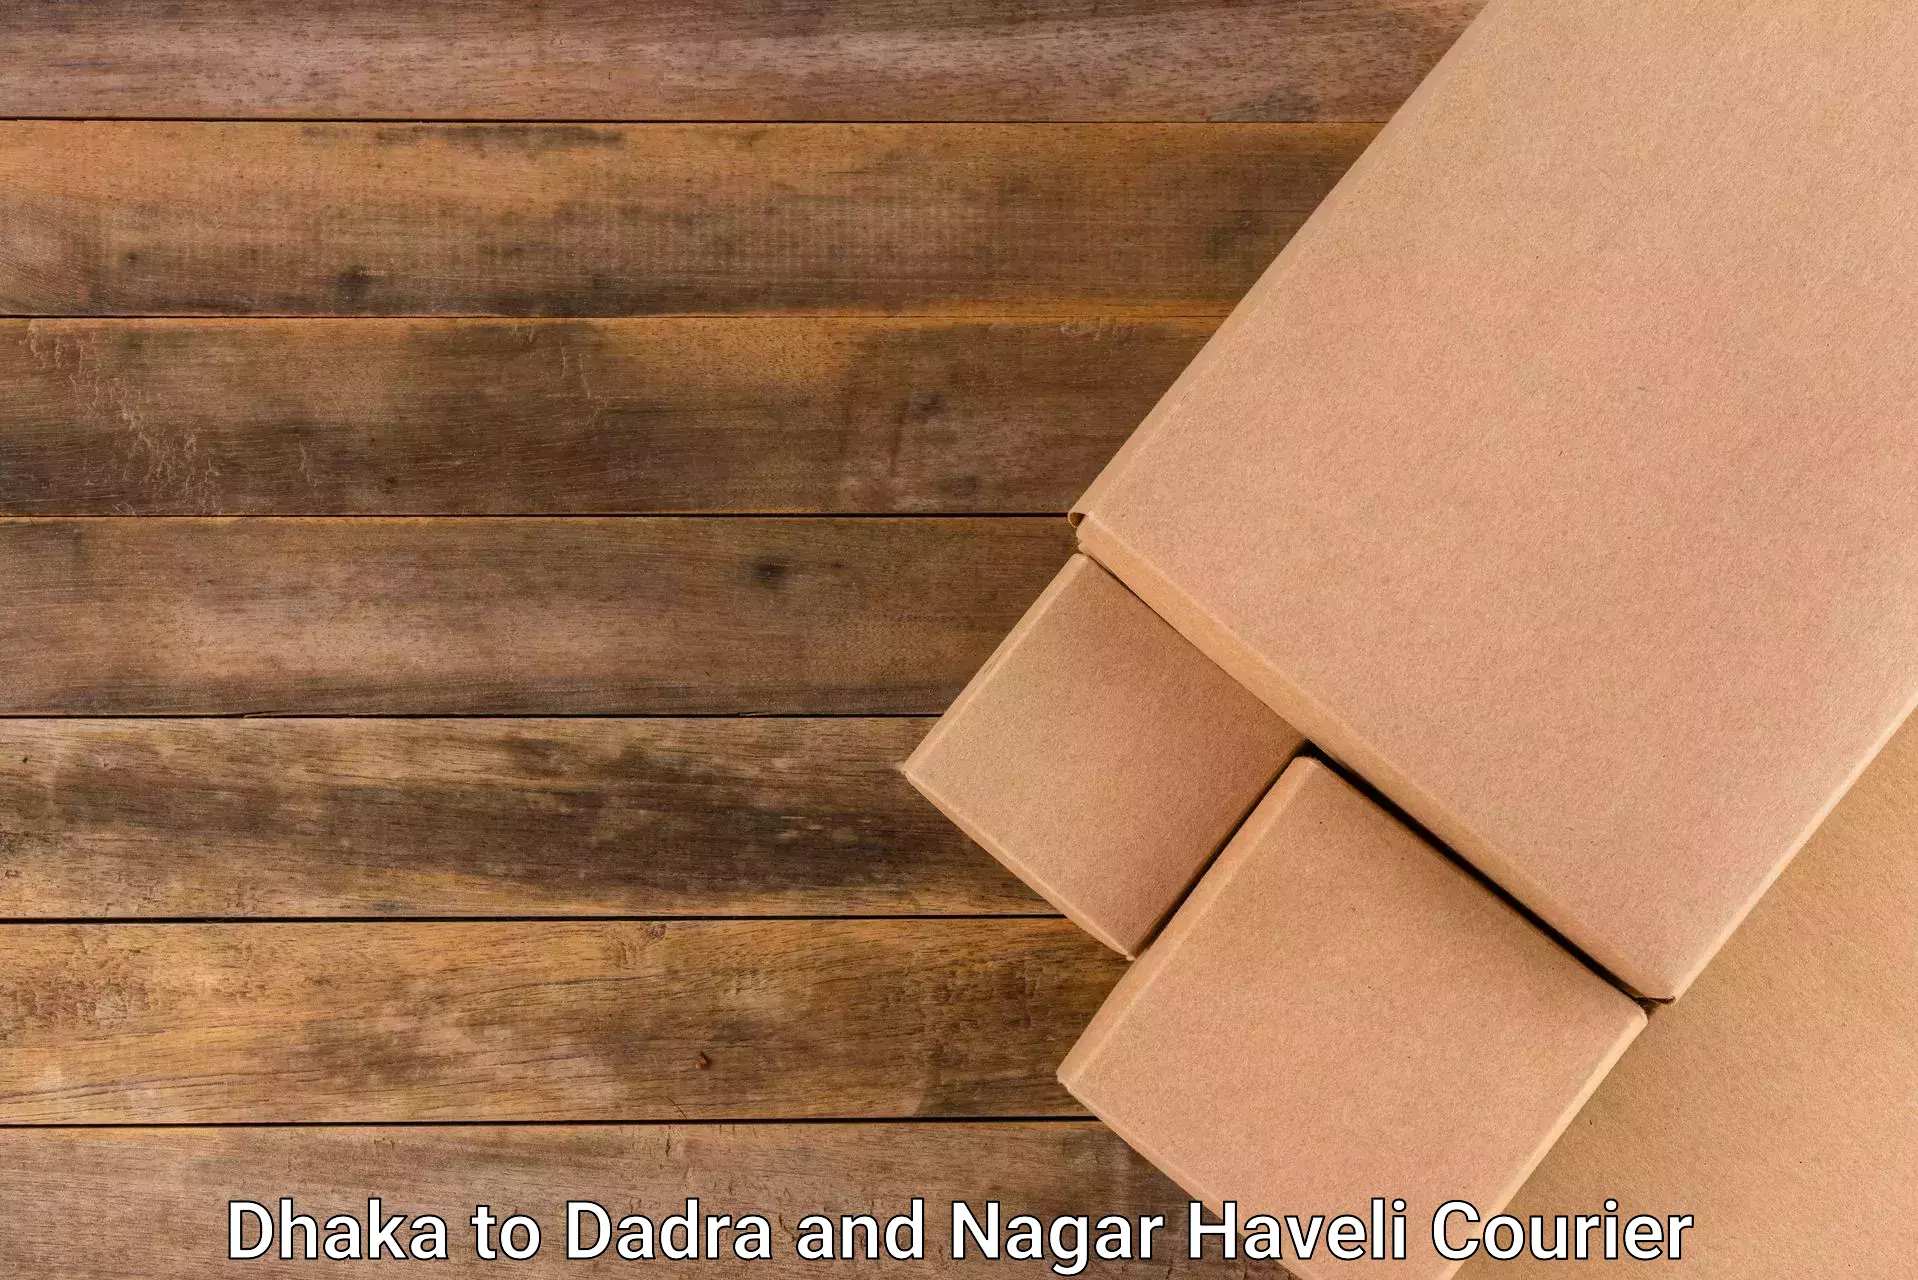 Professional courier handling Dhaka to Dadra and Nagar Haveli